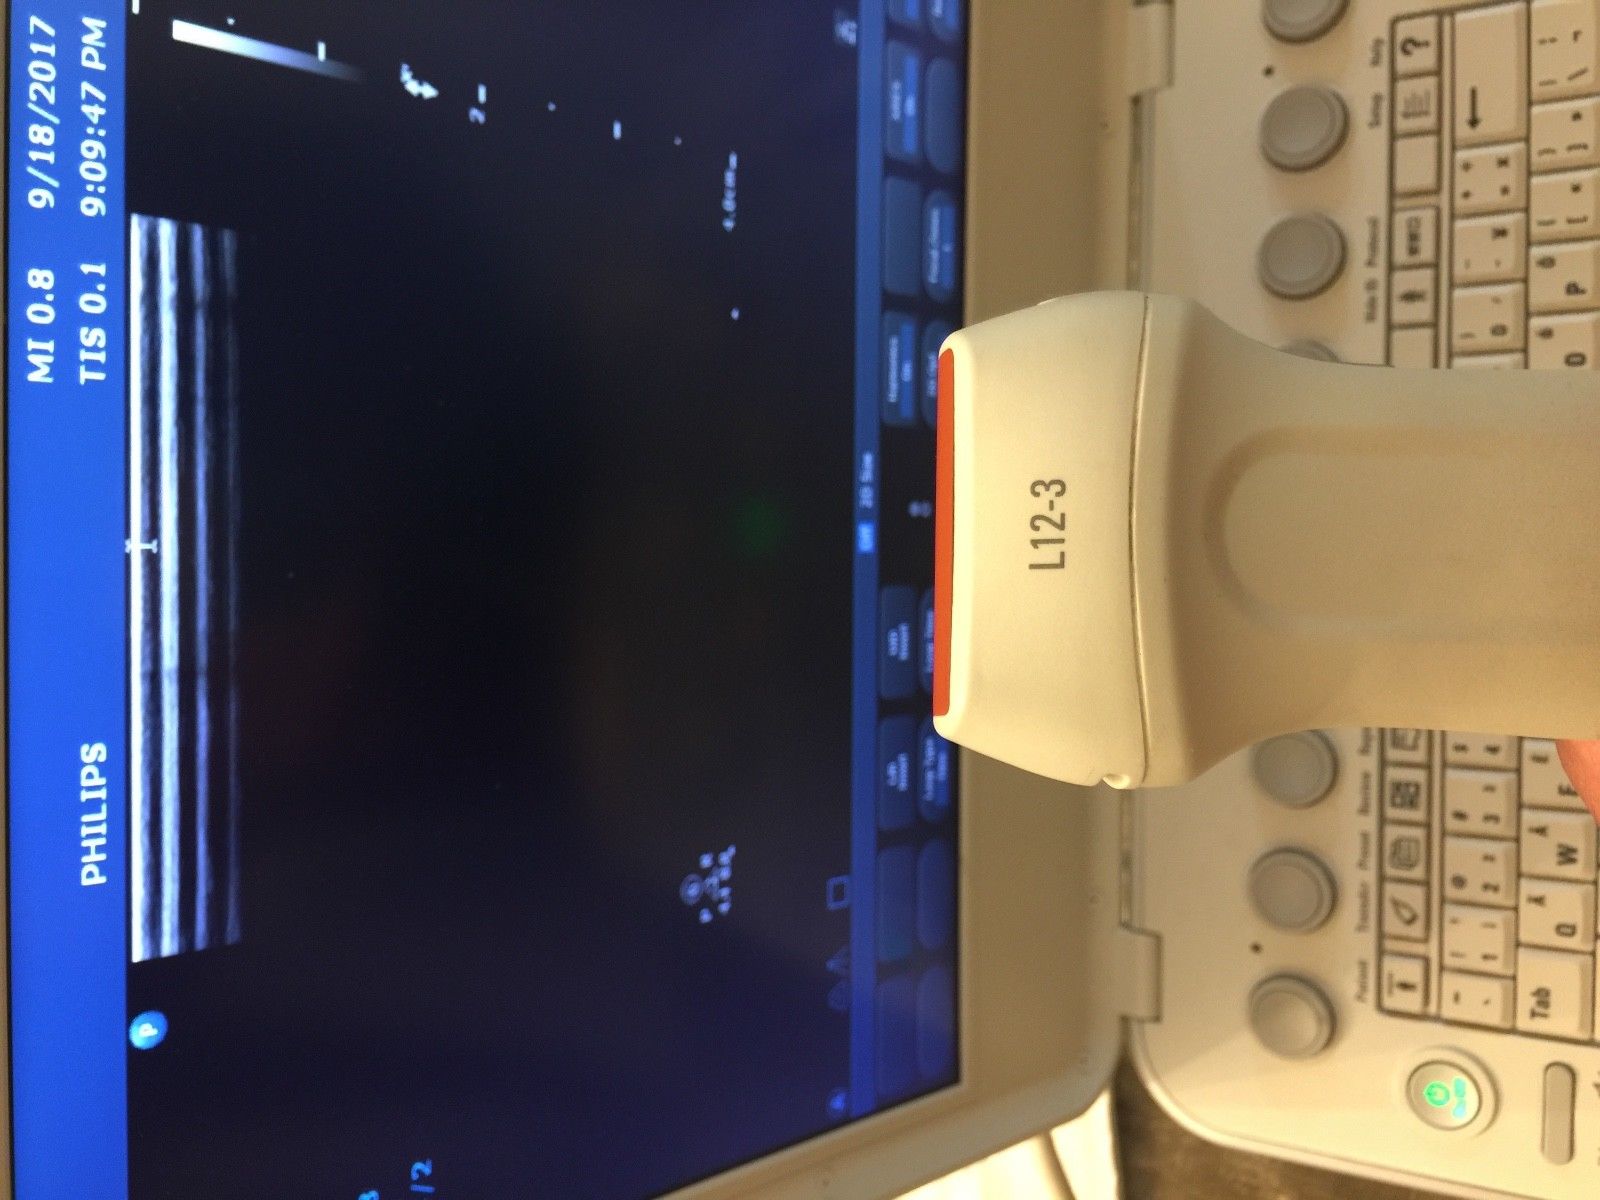 Philips L12-3 Vascular Linear MSK Ultrasound Transducer for CX50.